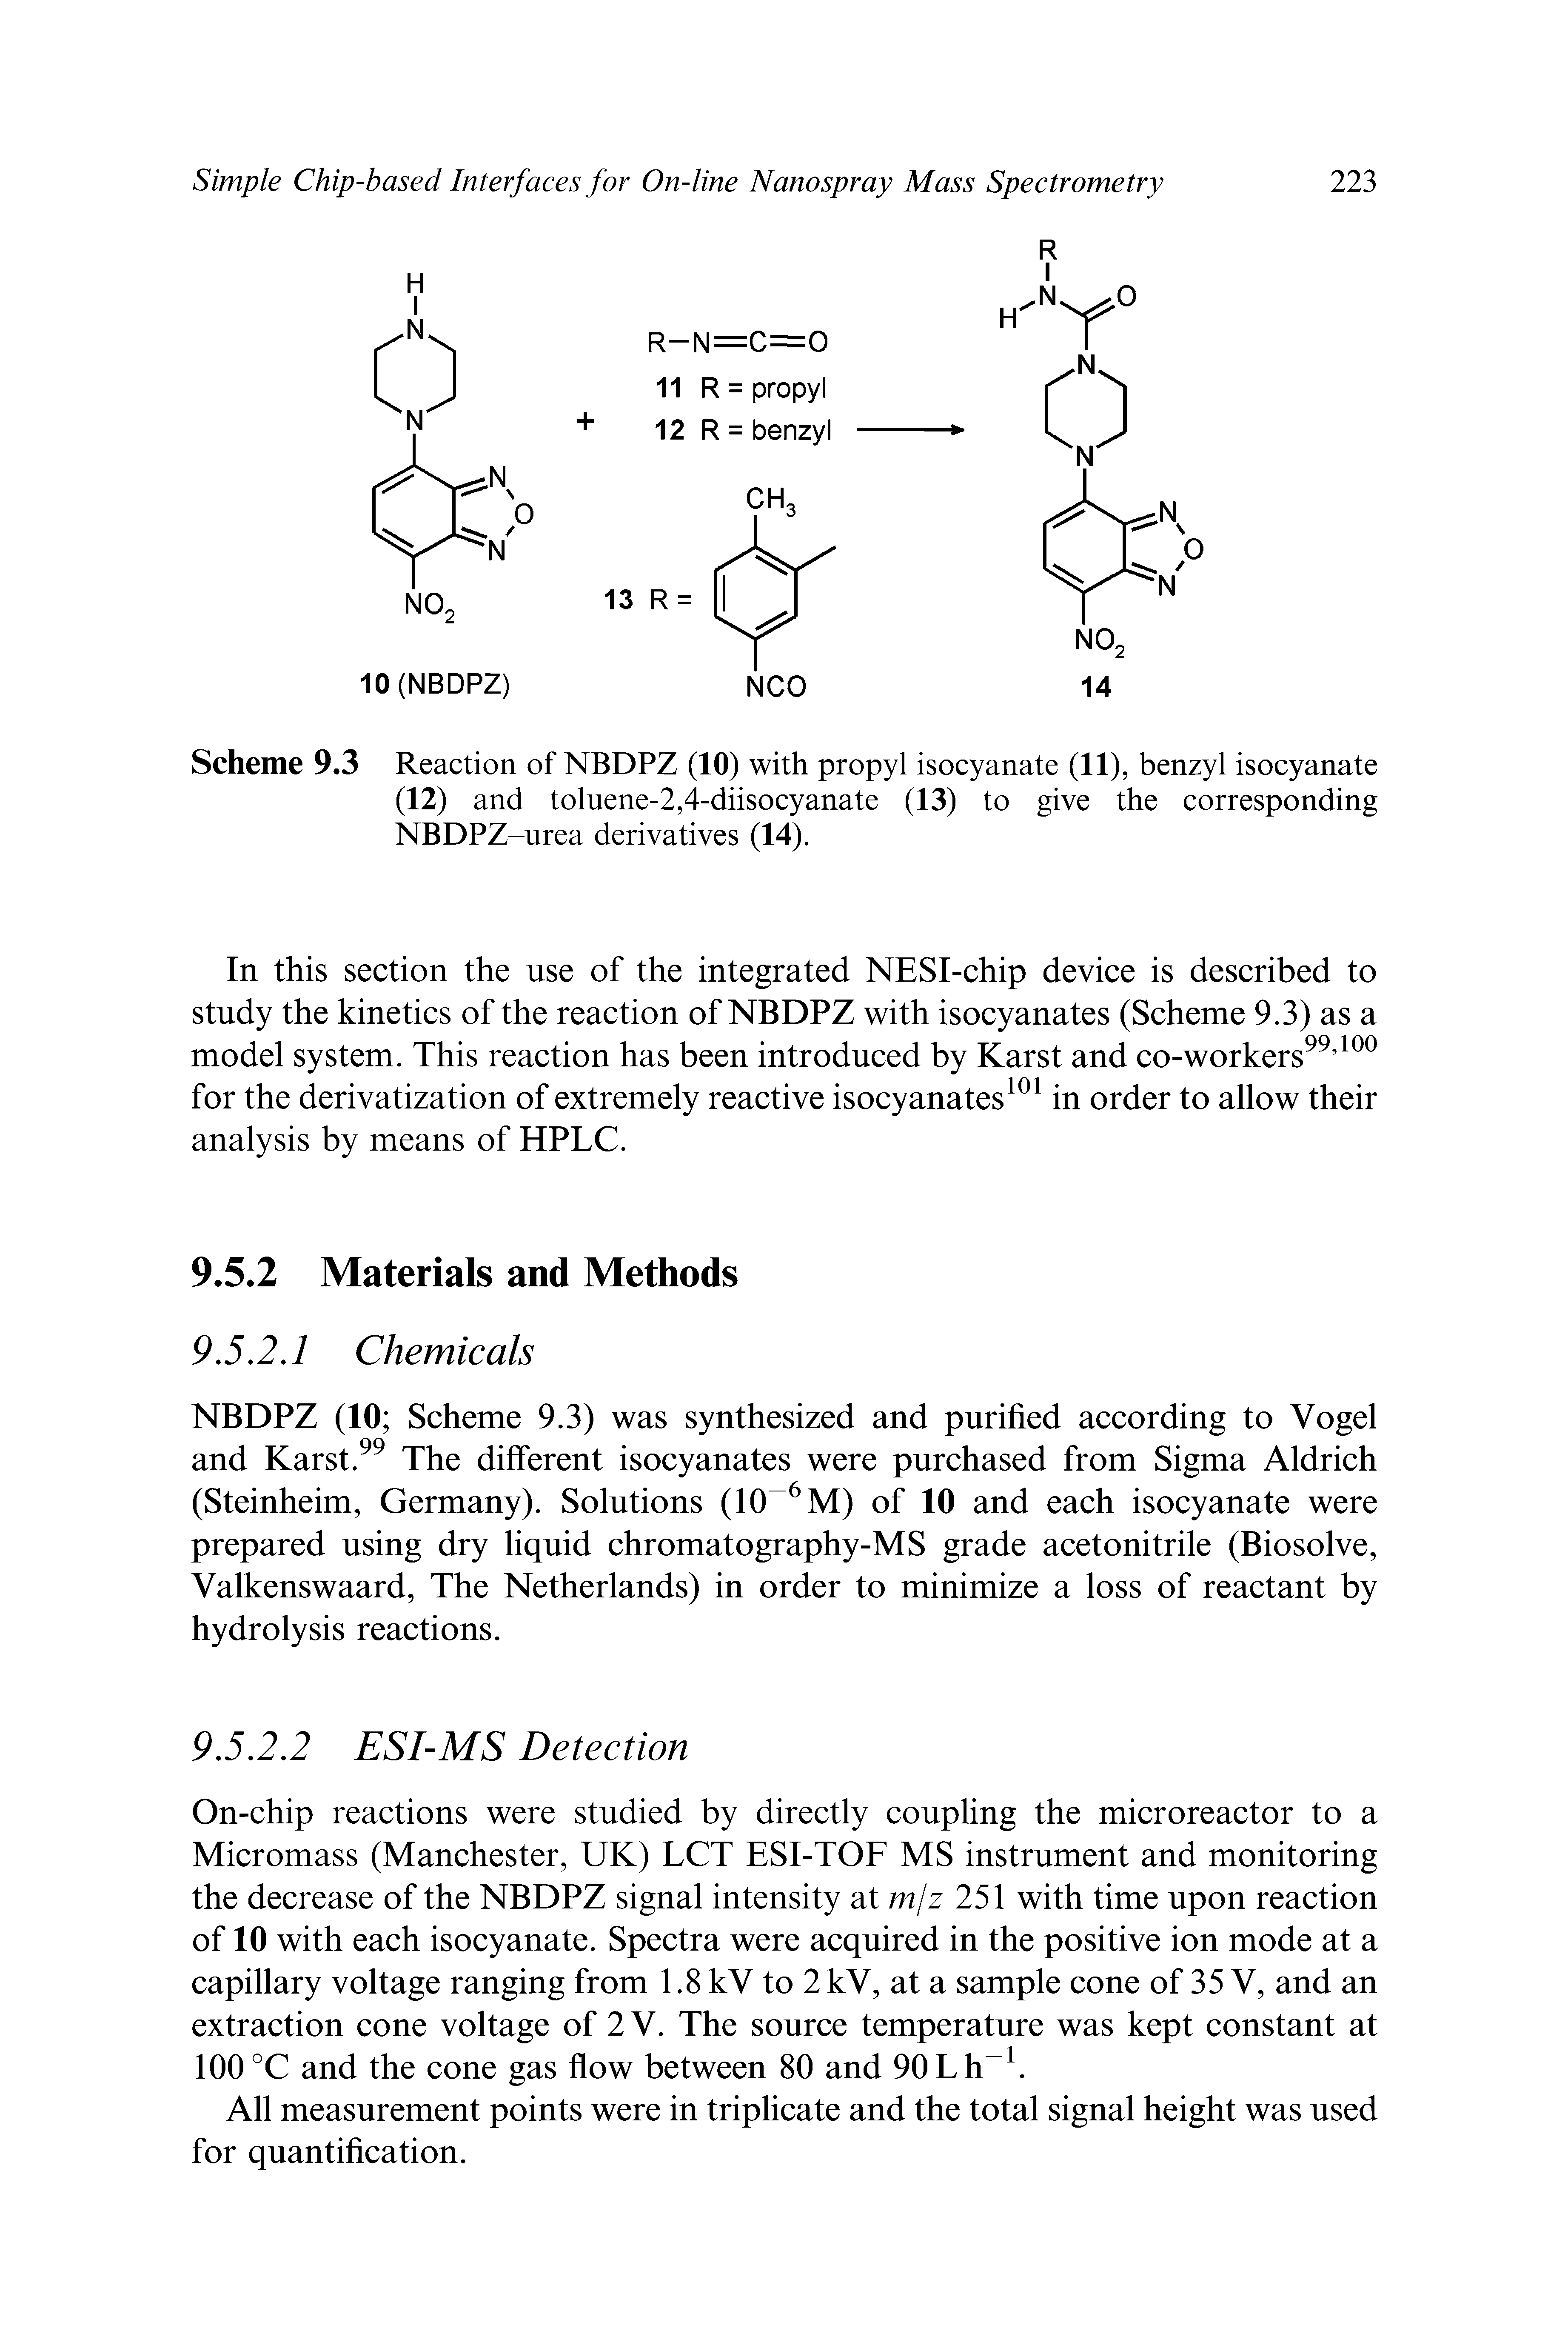 Scheme 9.3 Reaction of NBDPZ (10) with propyl isocyanate (11), benzyl isocyanate (12) and toluene-2,4-diisocyanate (13) to give the corresponding NBDPZ-urea derivatives (14).